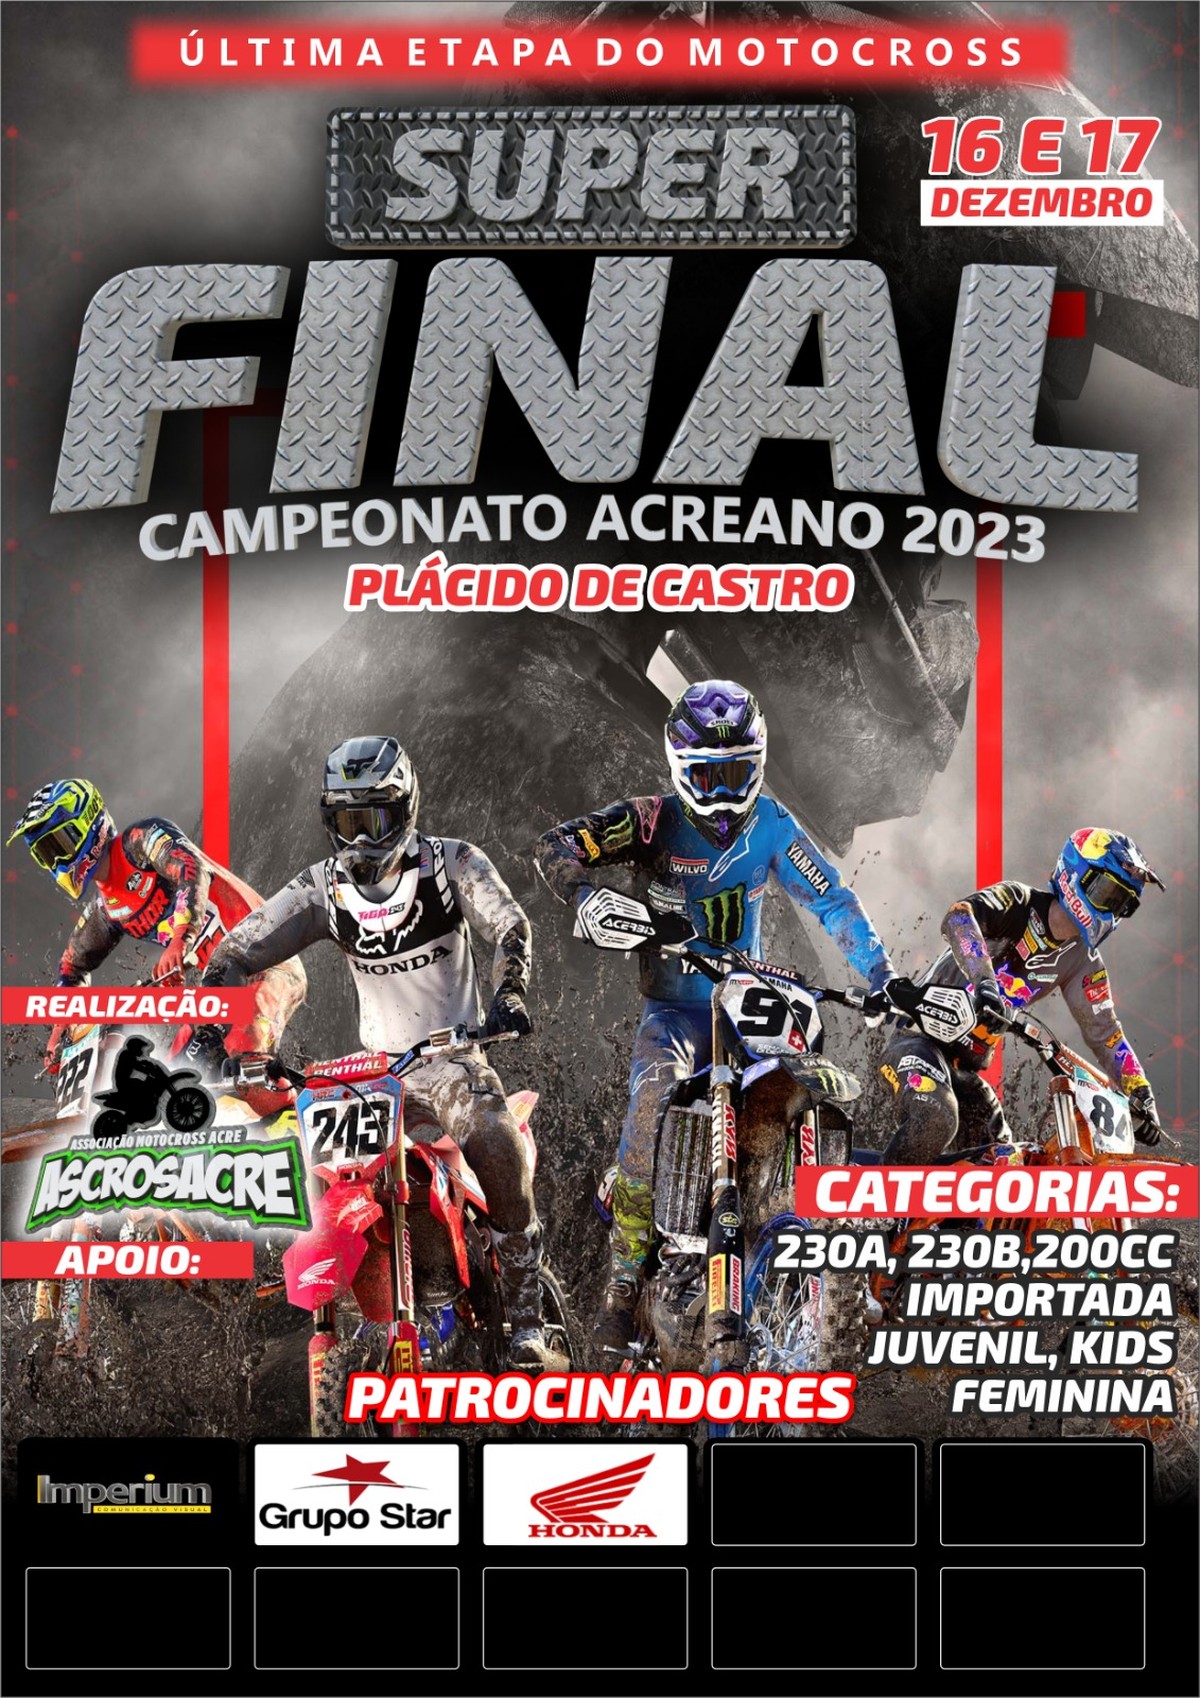 1ª Premiação: Campeonato Paulista de Motocross 2023: Itapetininga-SP 